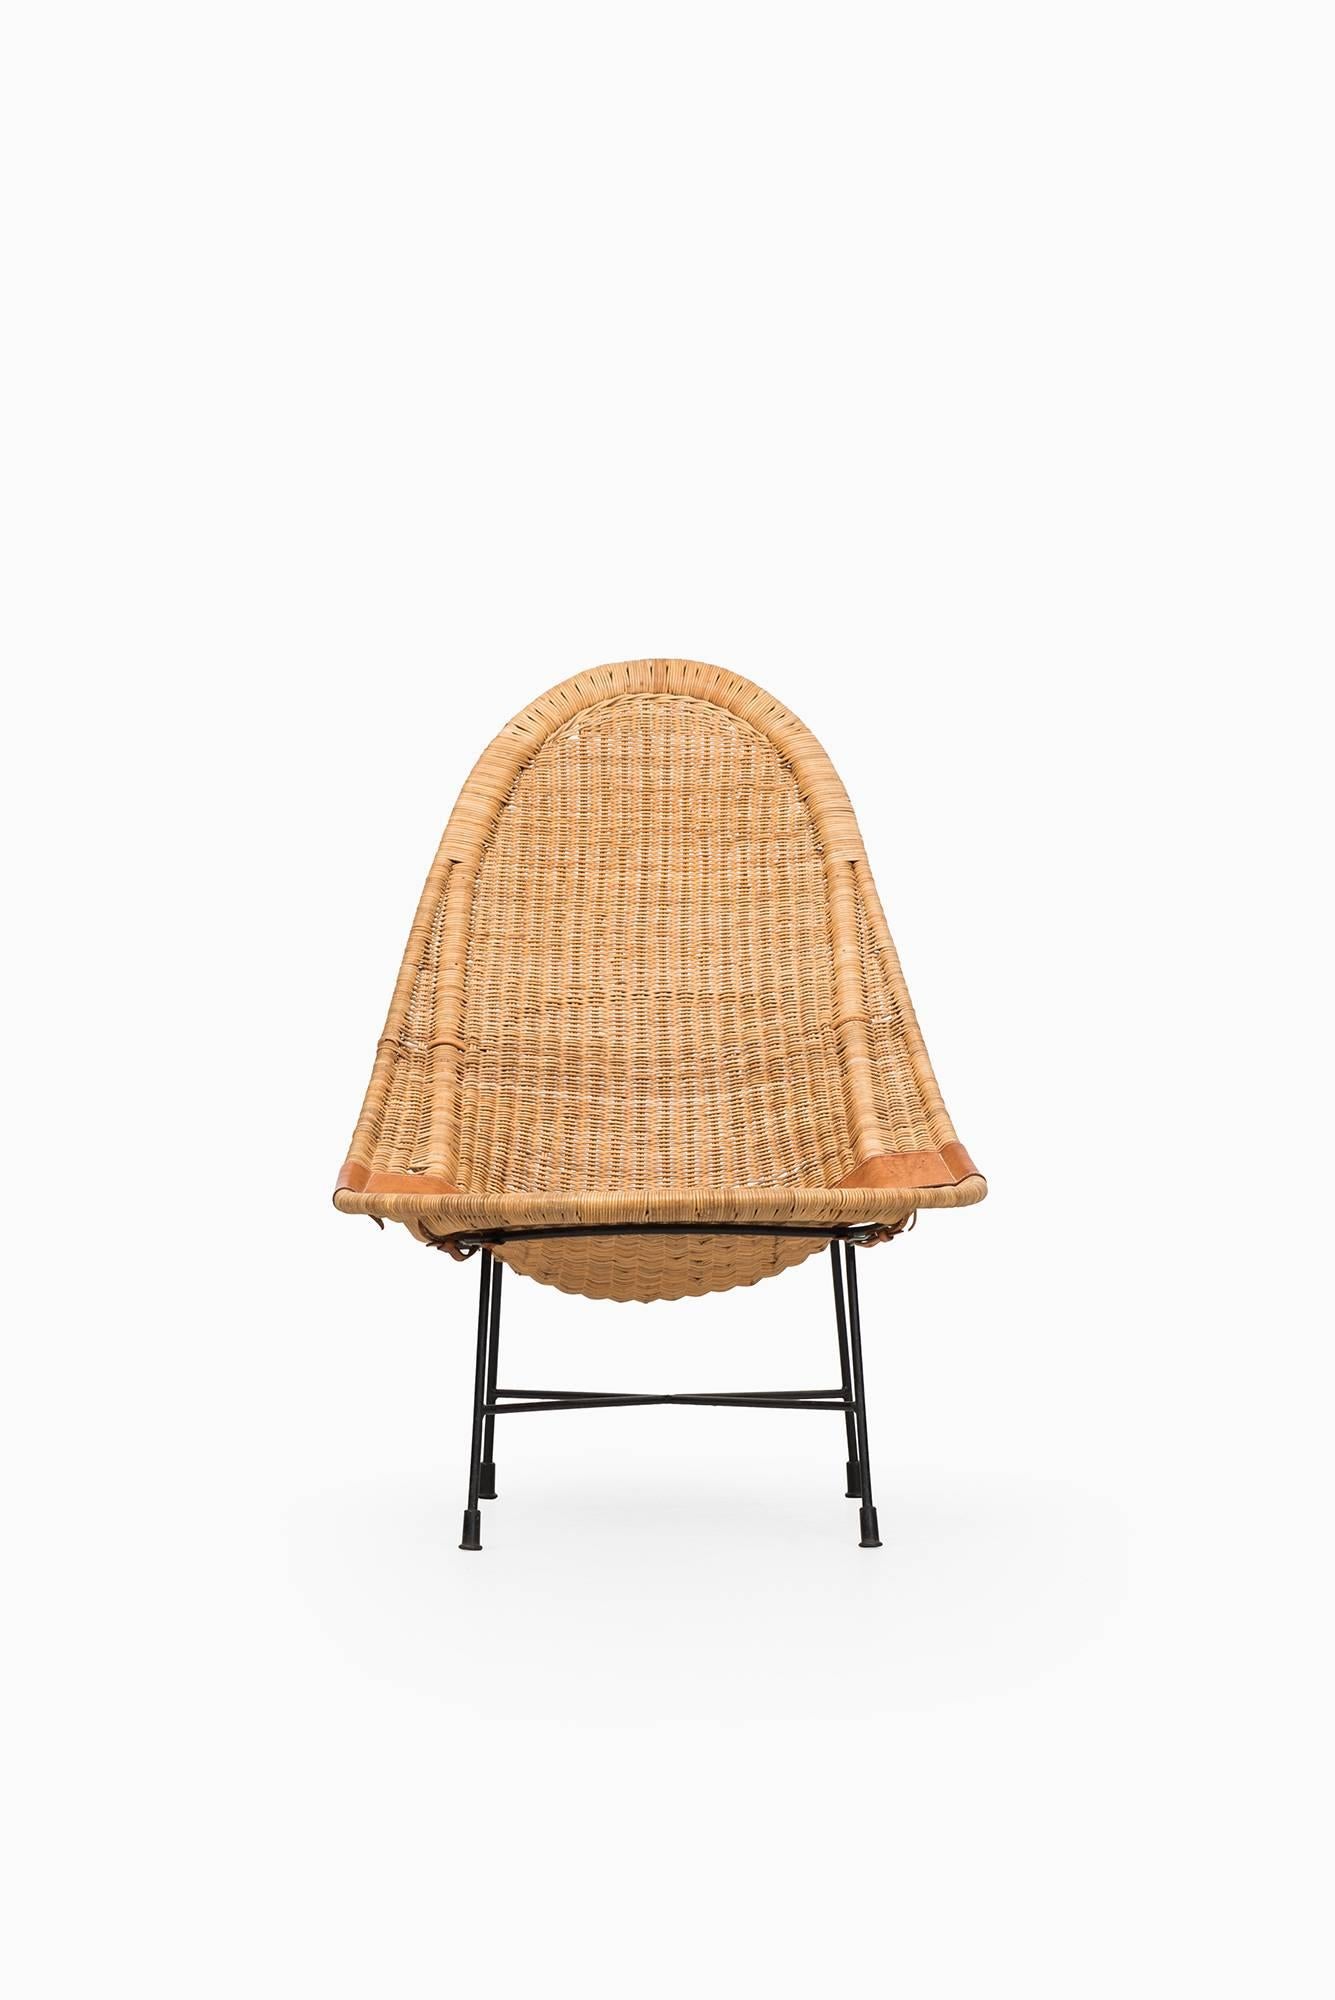 Rare easy chair model Stora Kraal designed by Kerstin Hörlin-Holmquist. Produced by Nordiska Kompaniet (NK) in Sweden.